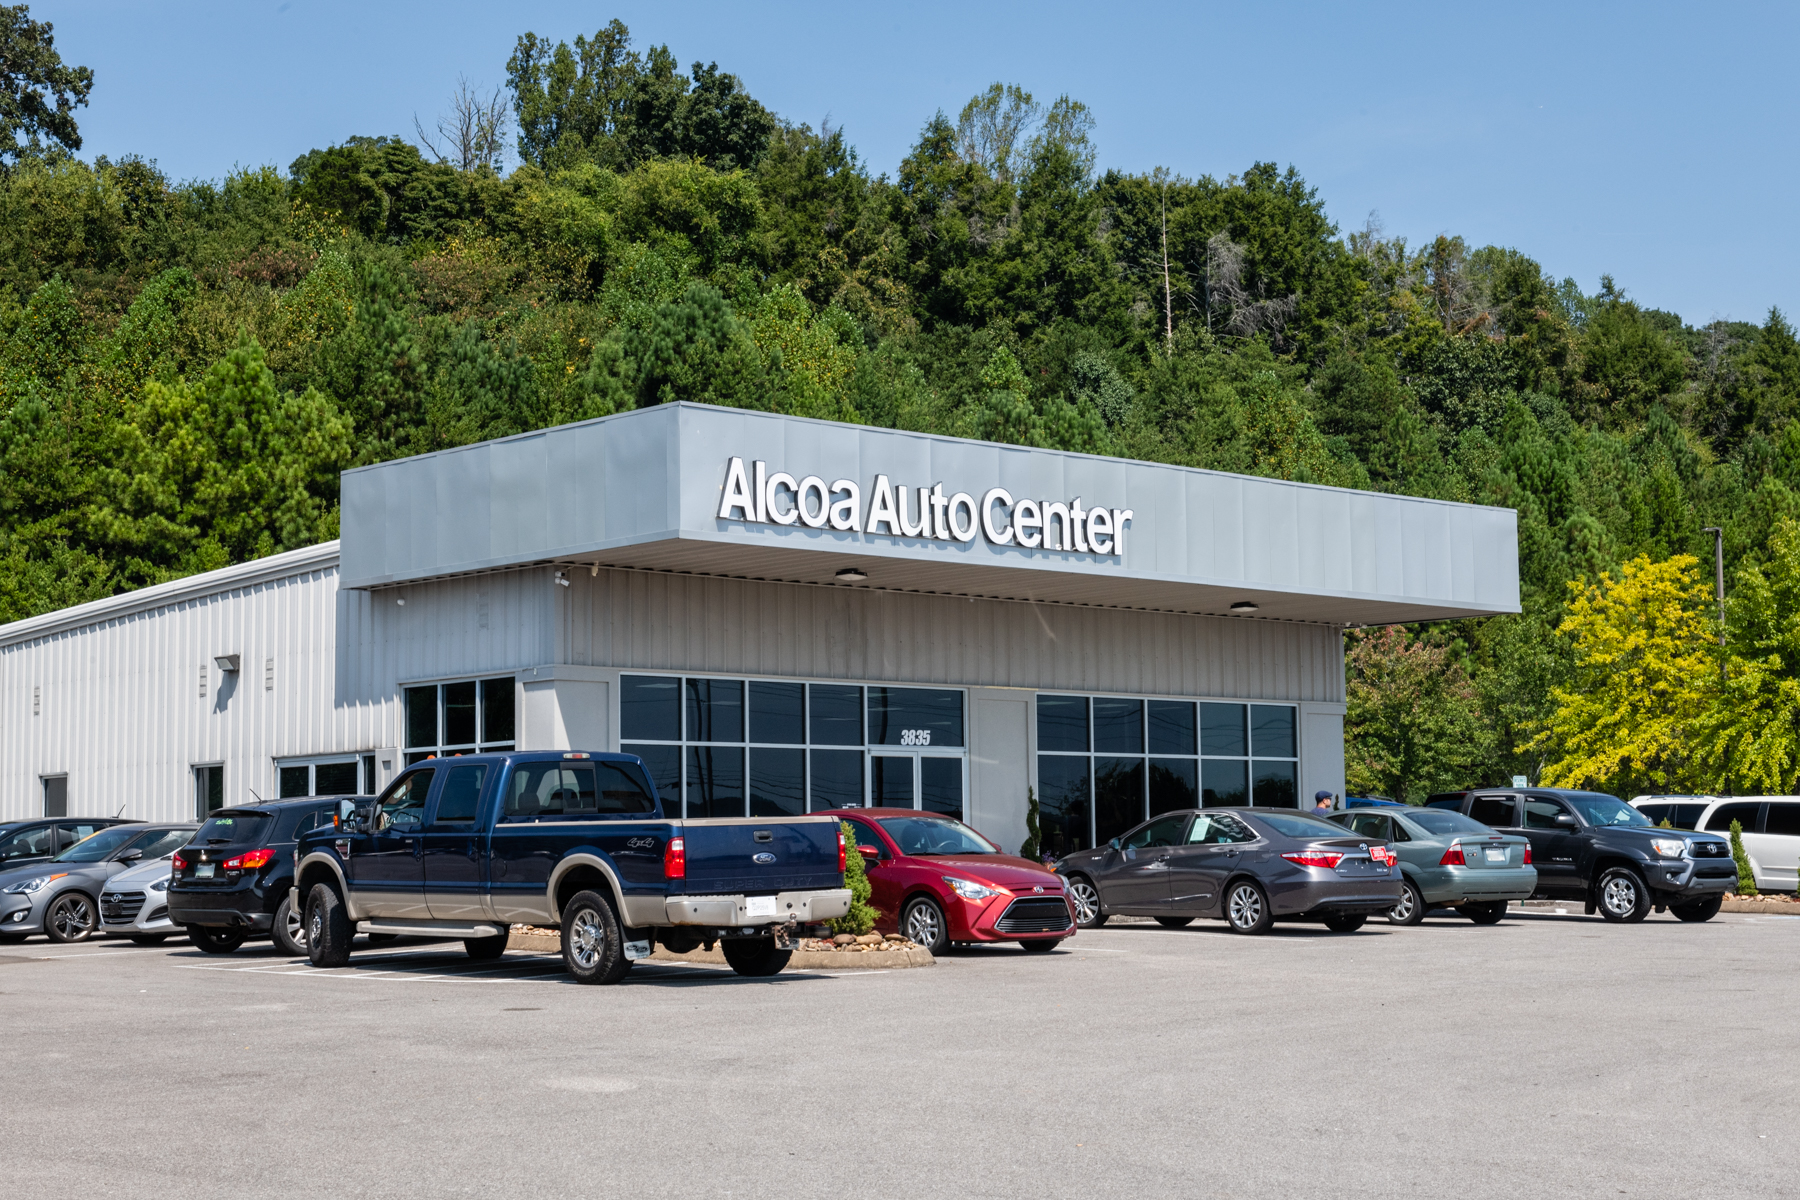 Alcoa Auto Center